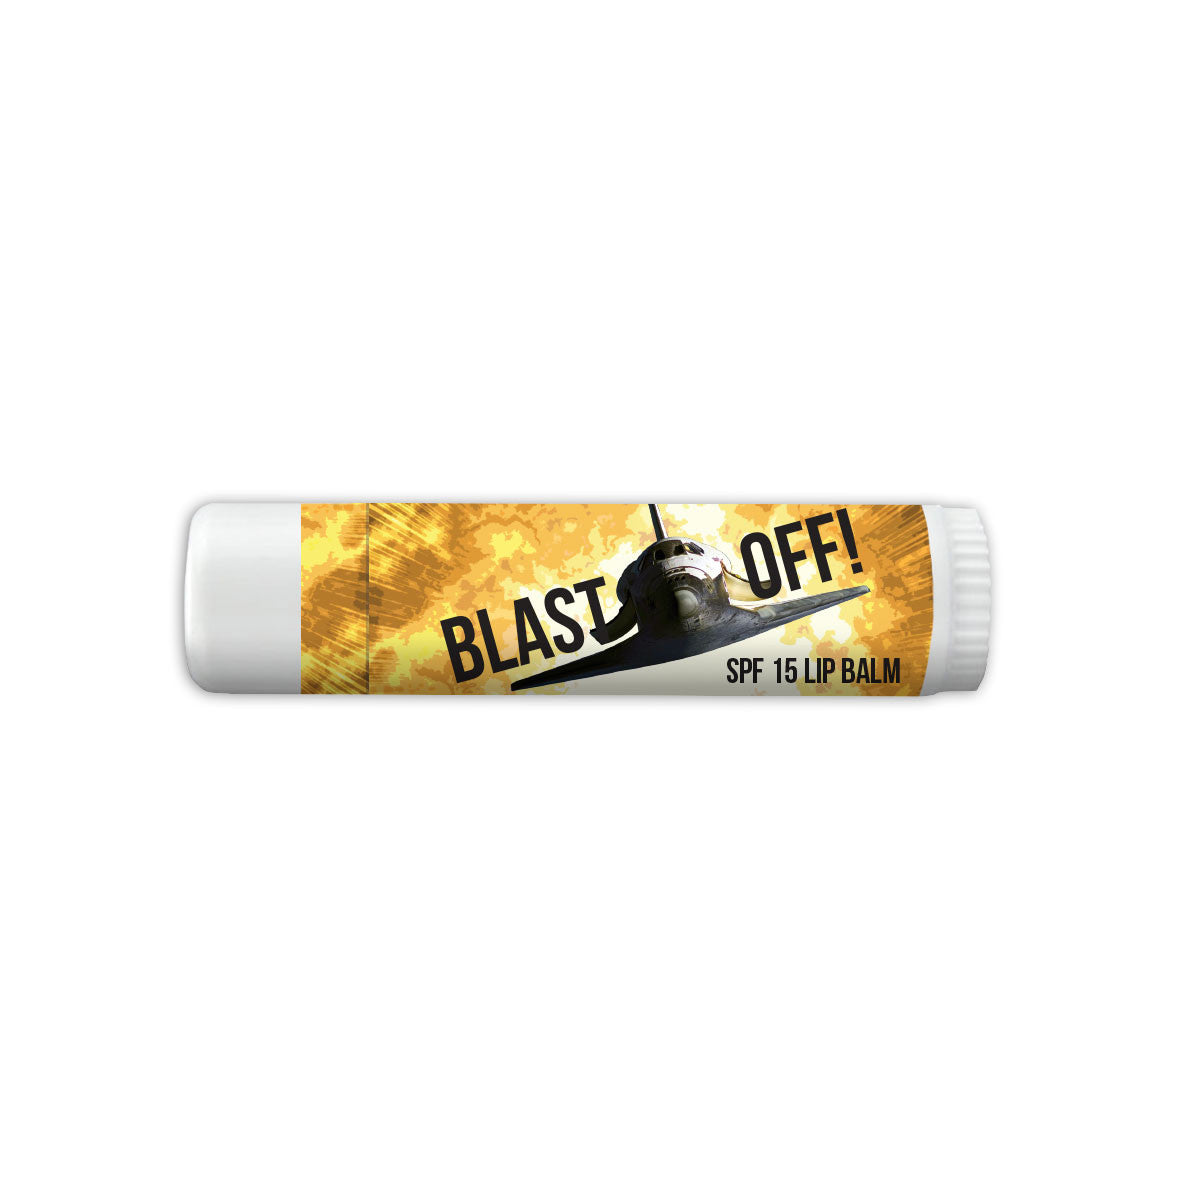 Blast Off - LSR0023